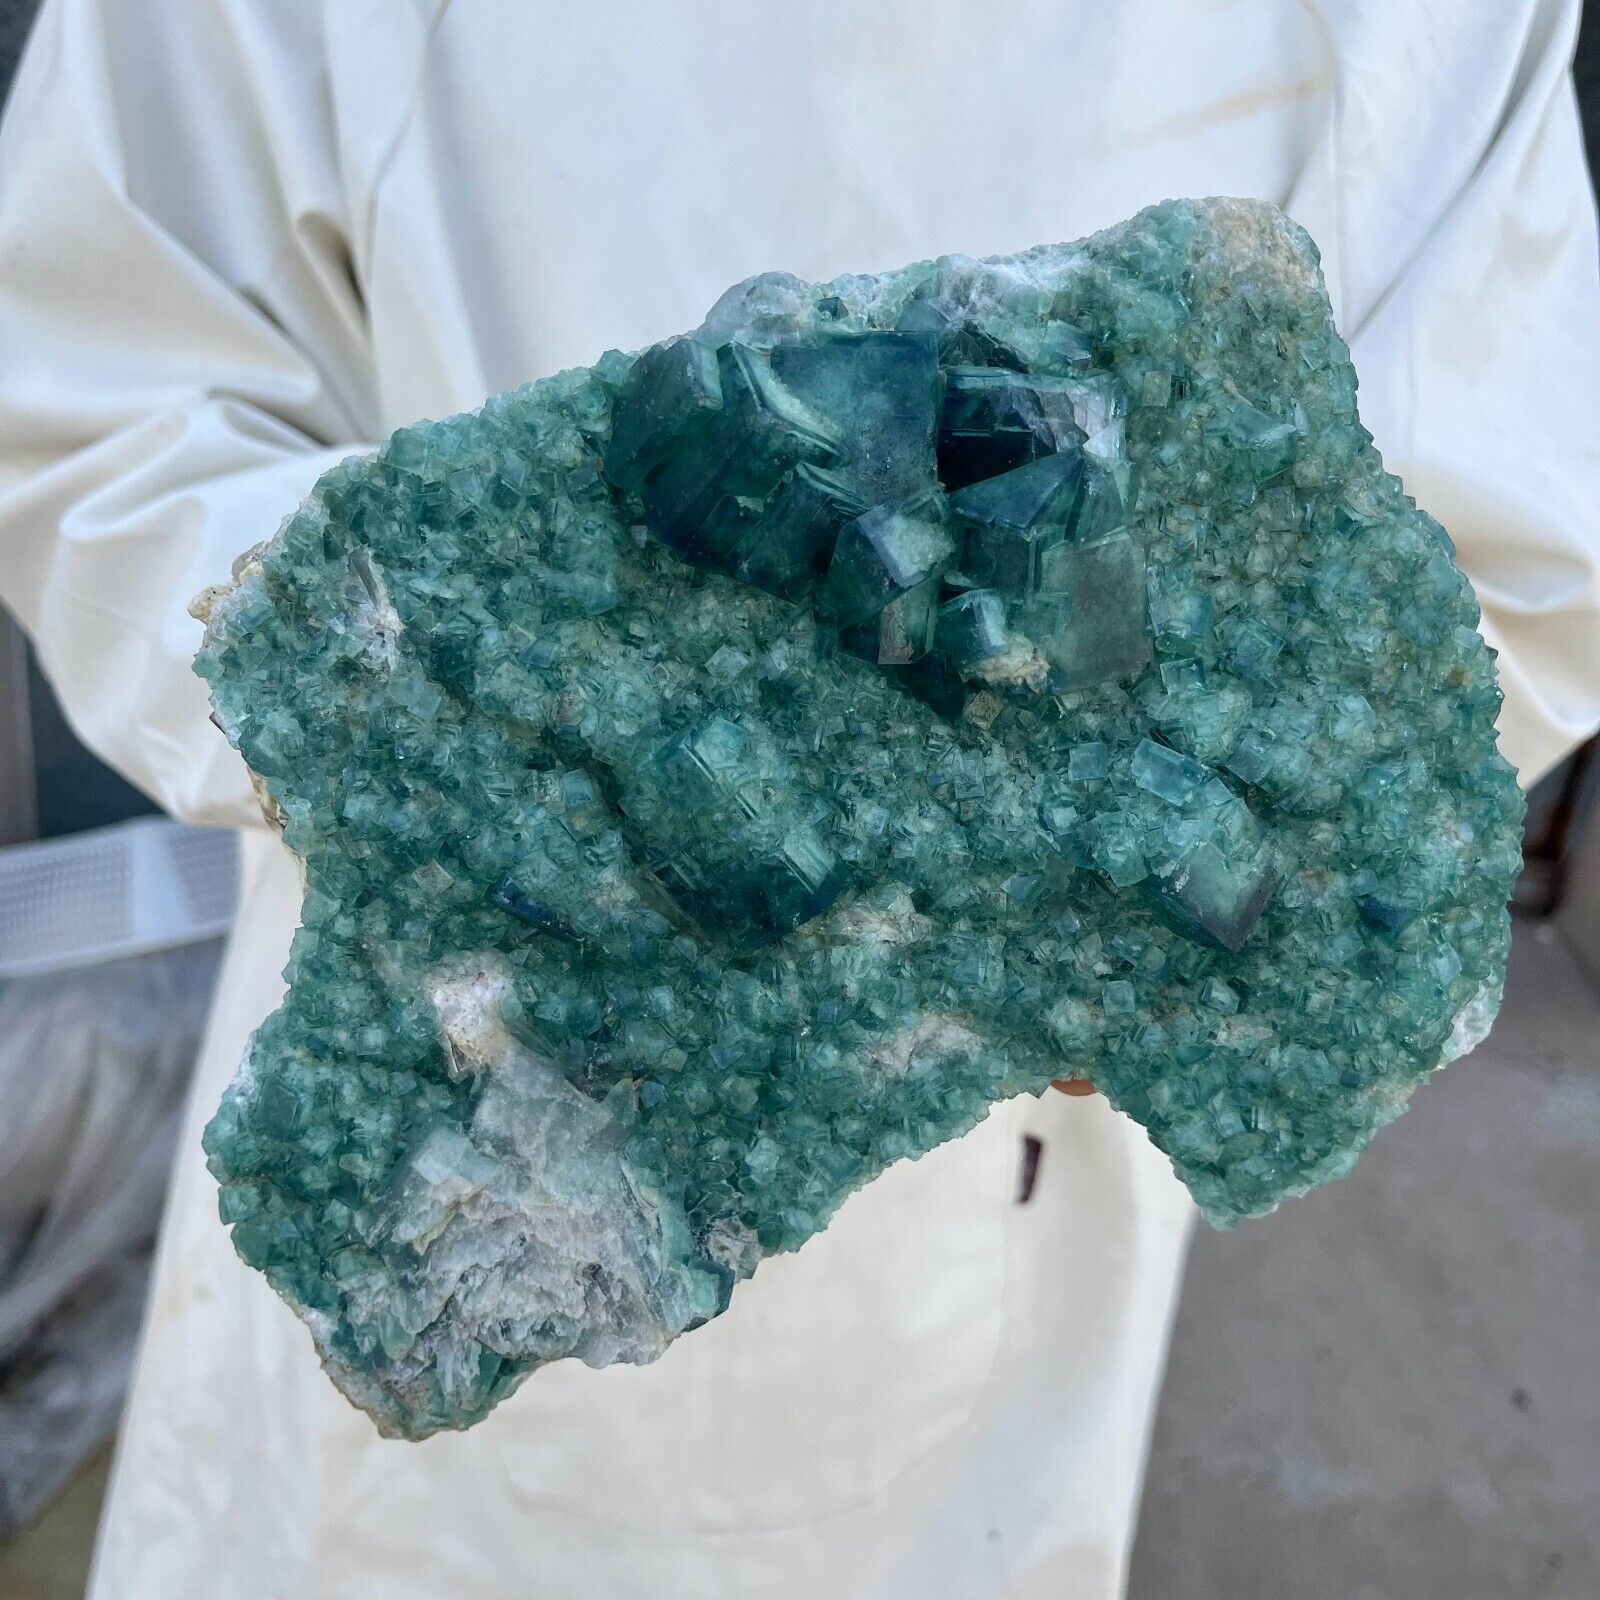 6.8LB Natural super beautiful green fluorite crystal mineral healing specimens